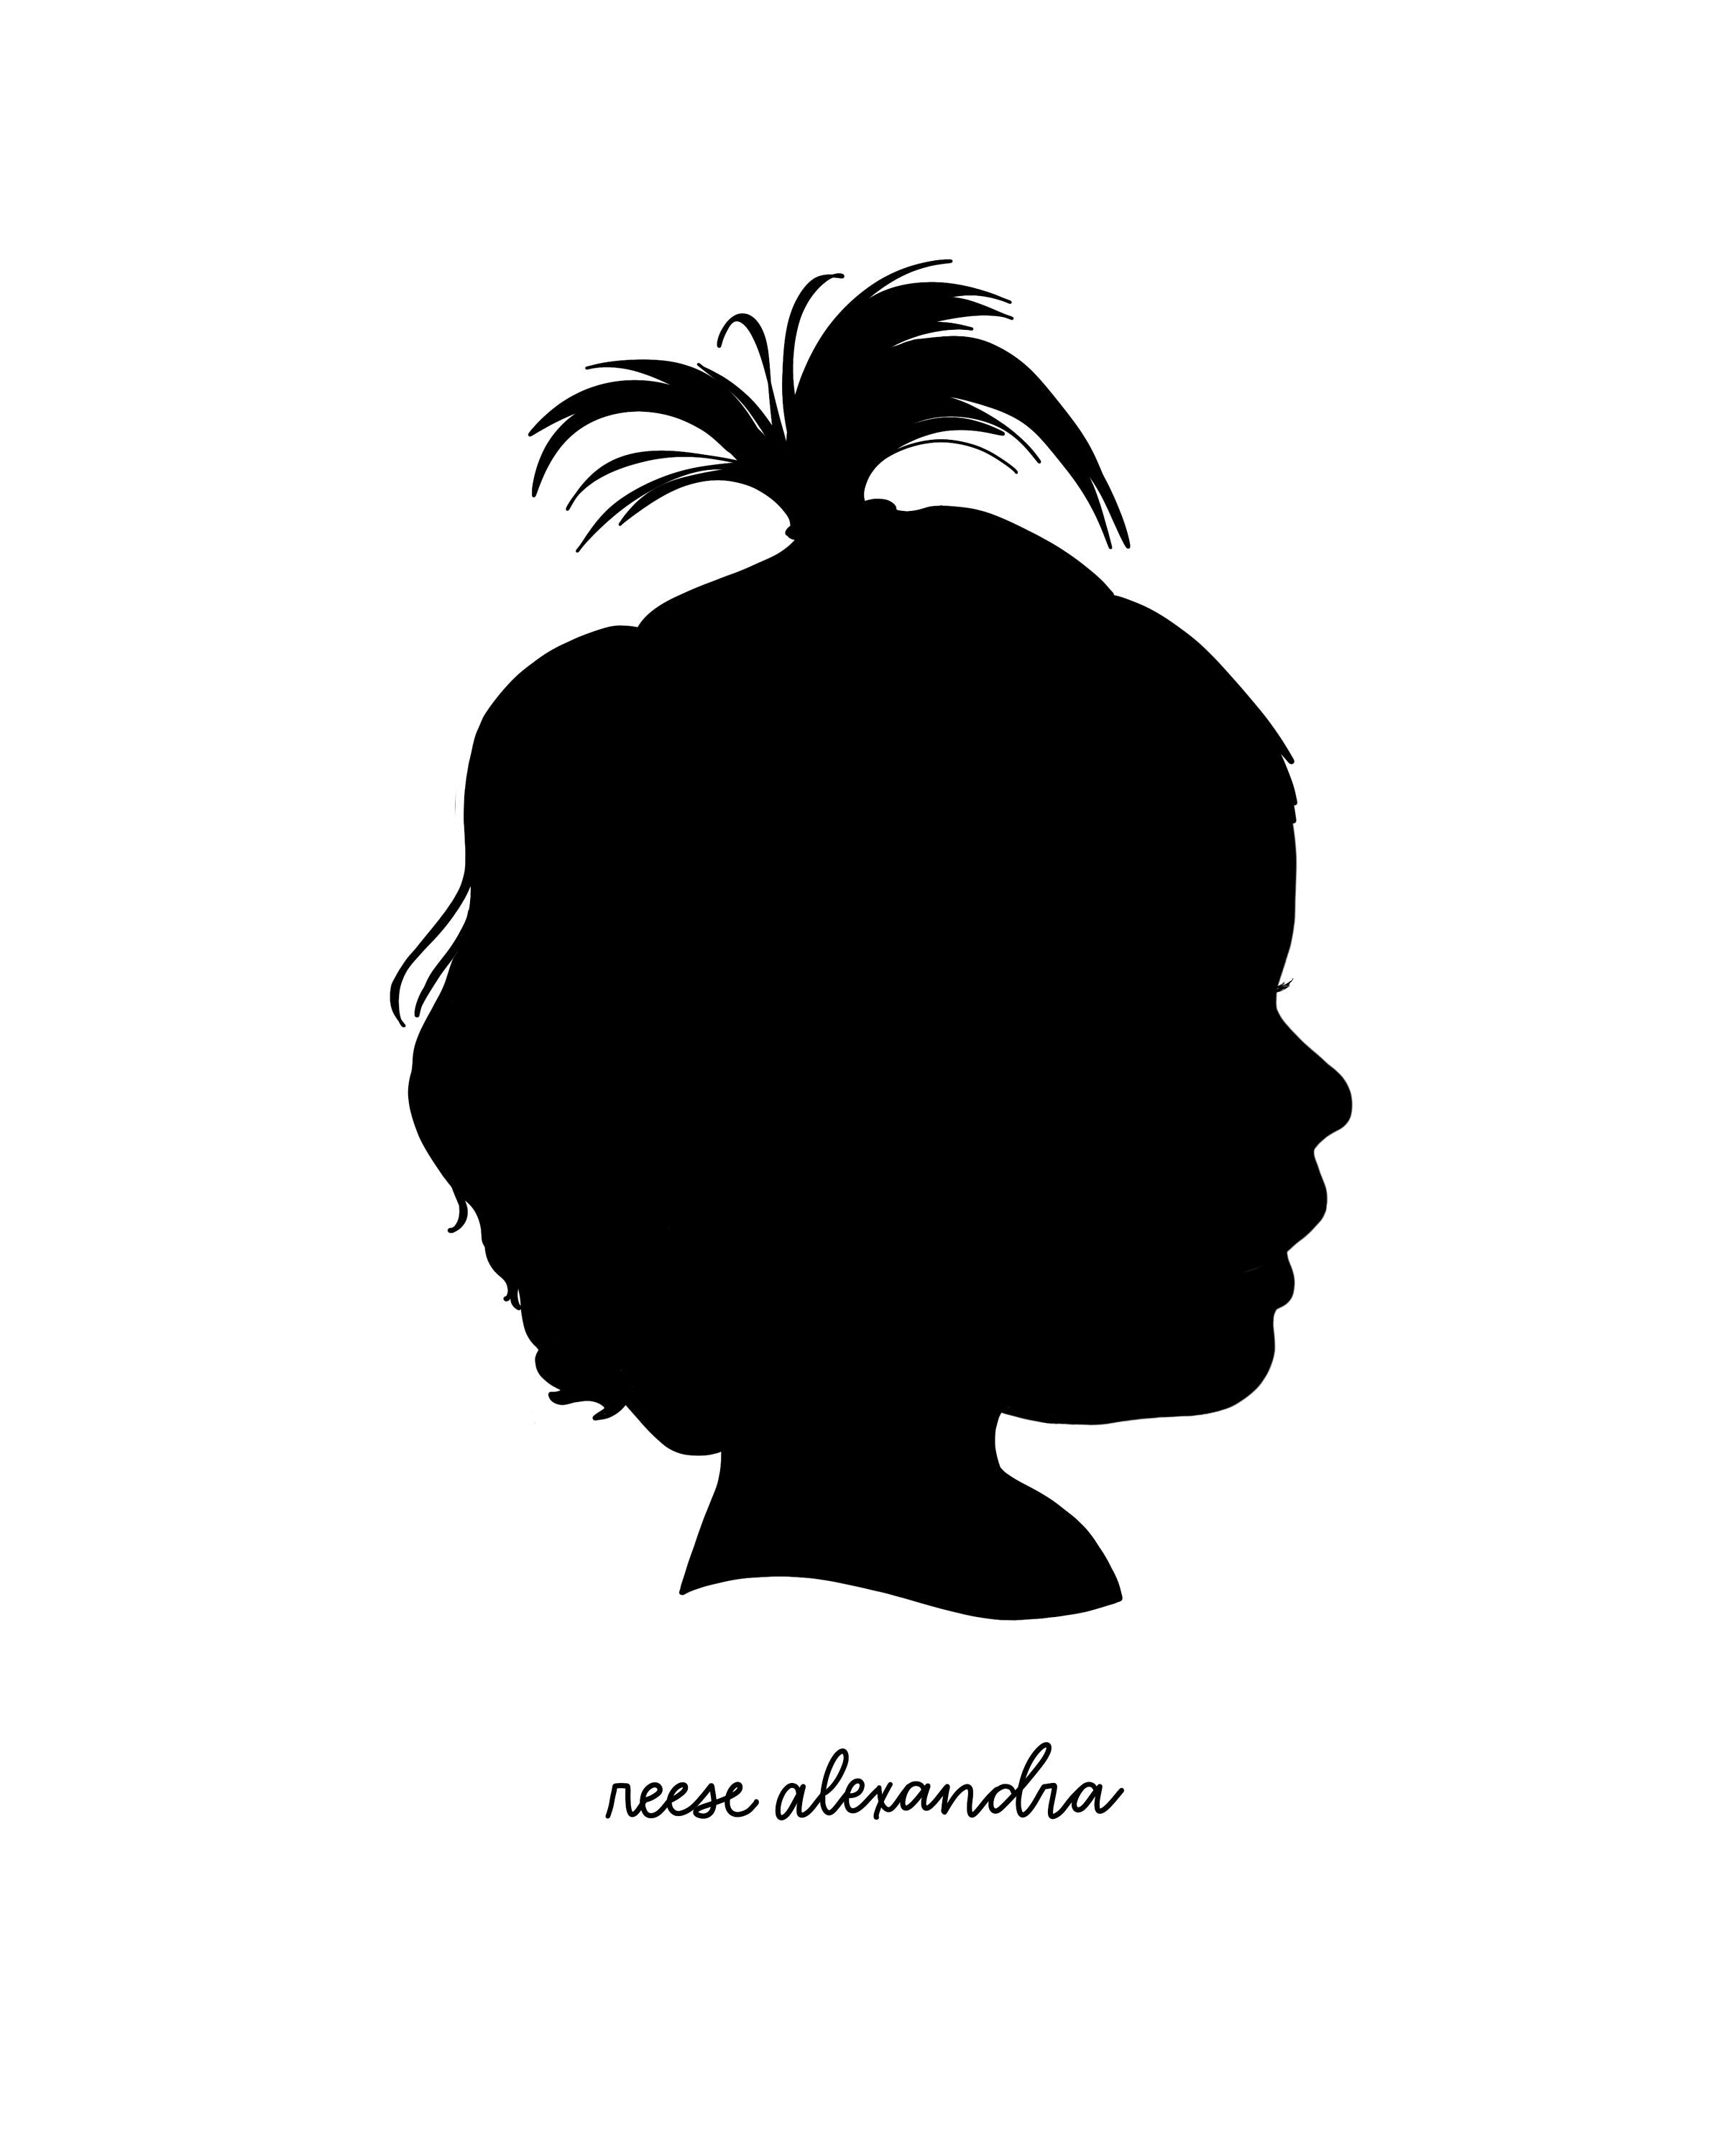 Black and White Custom Silhouette Child Silhouette Portrait